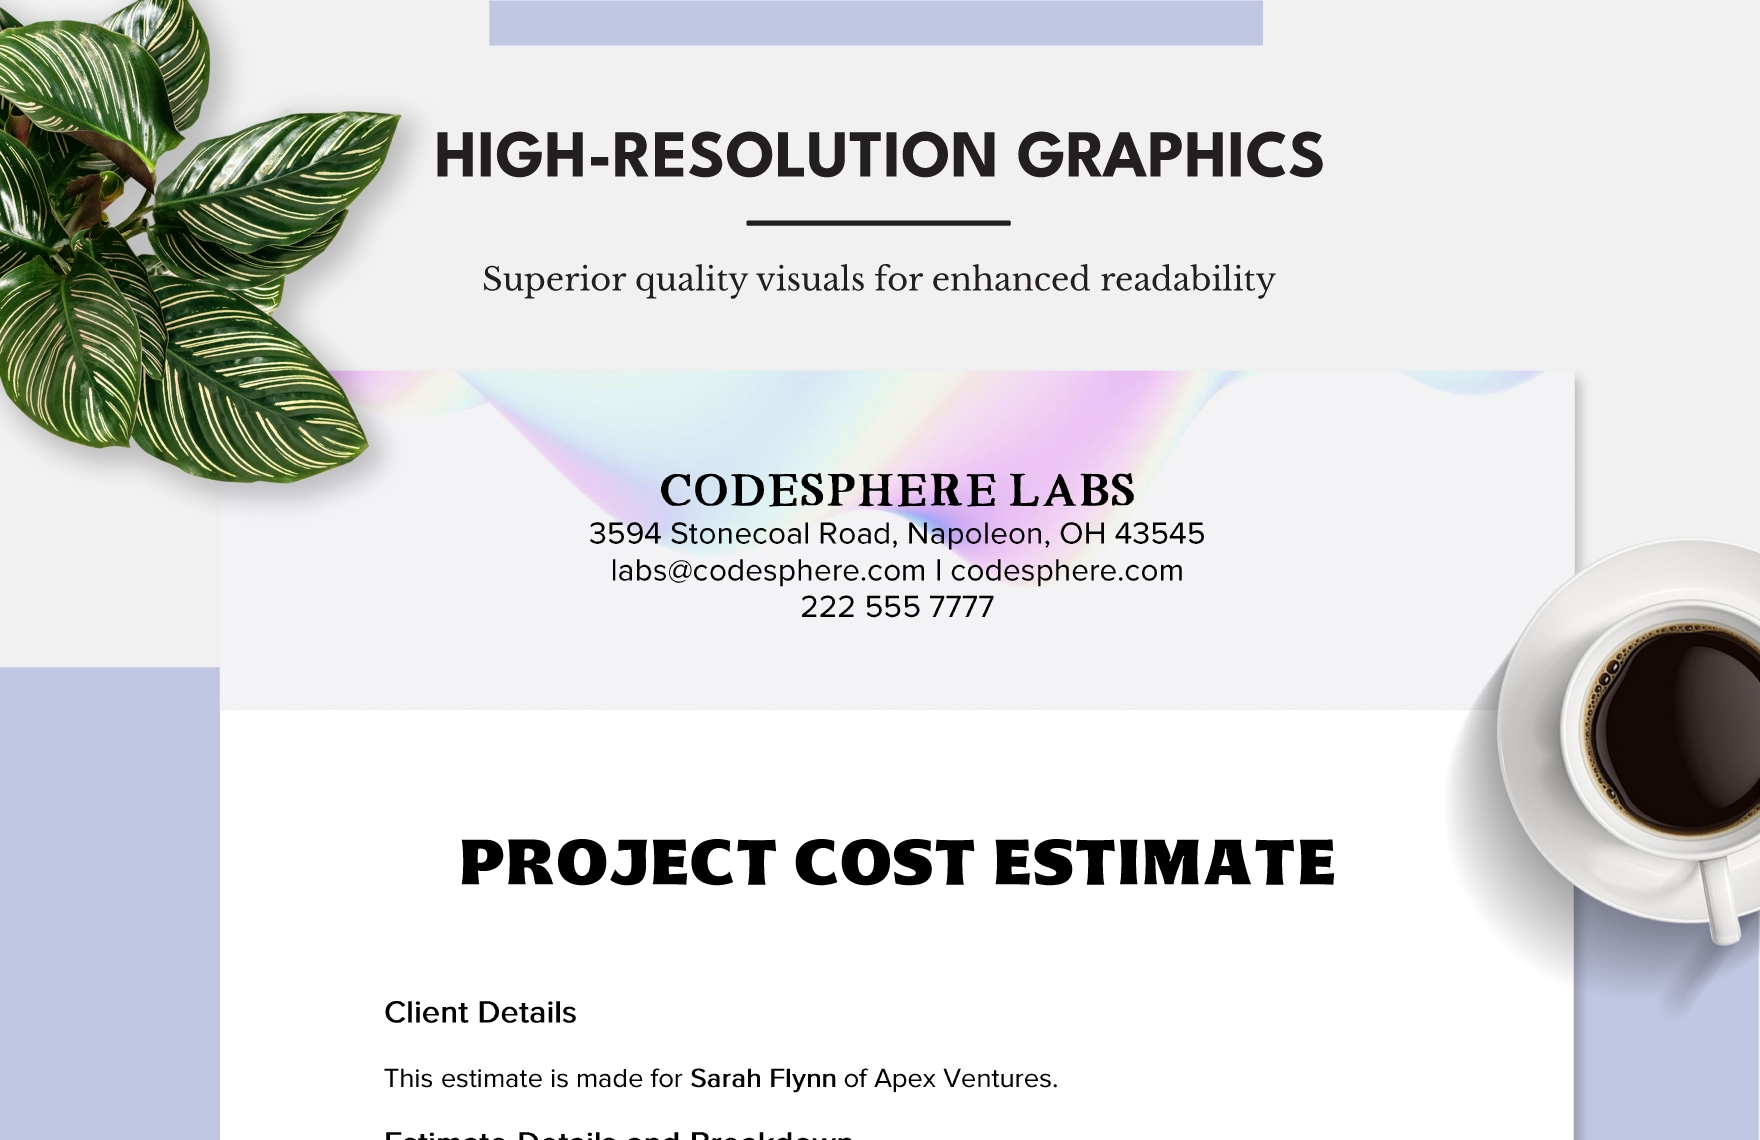 Project Cost Estimate Template